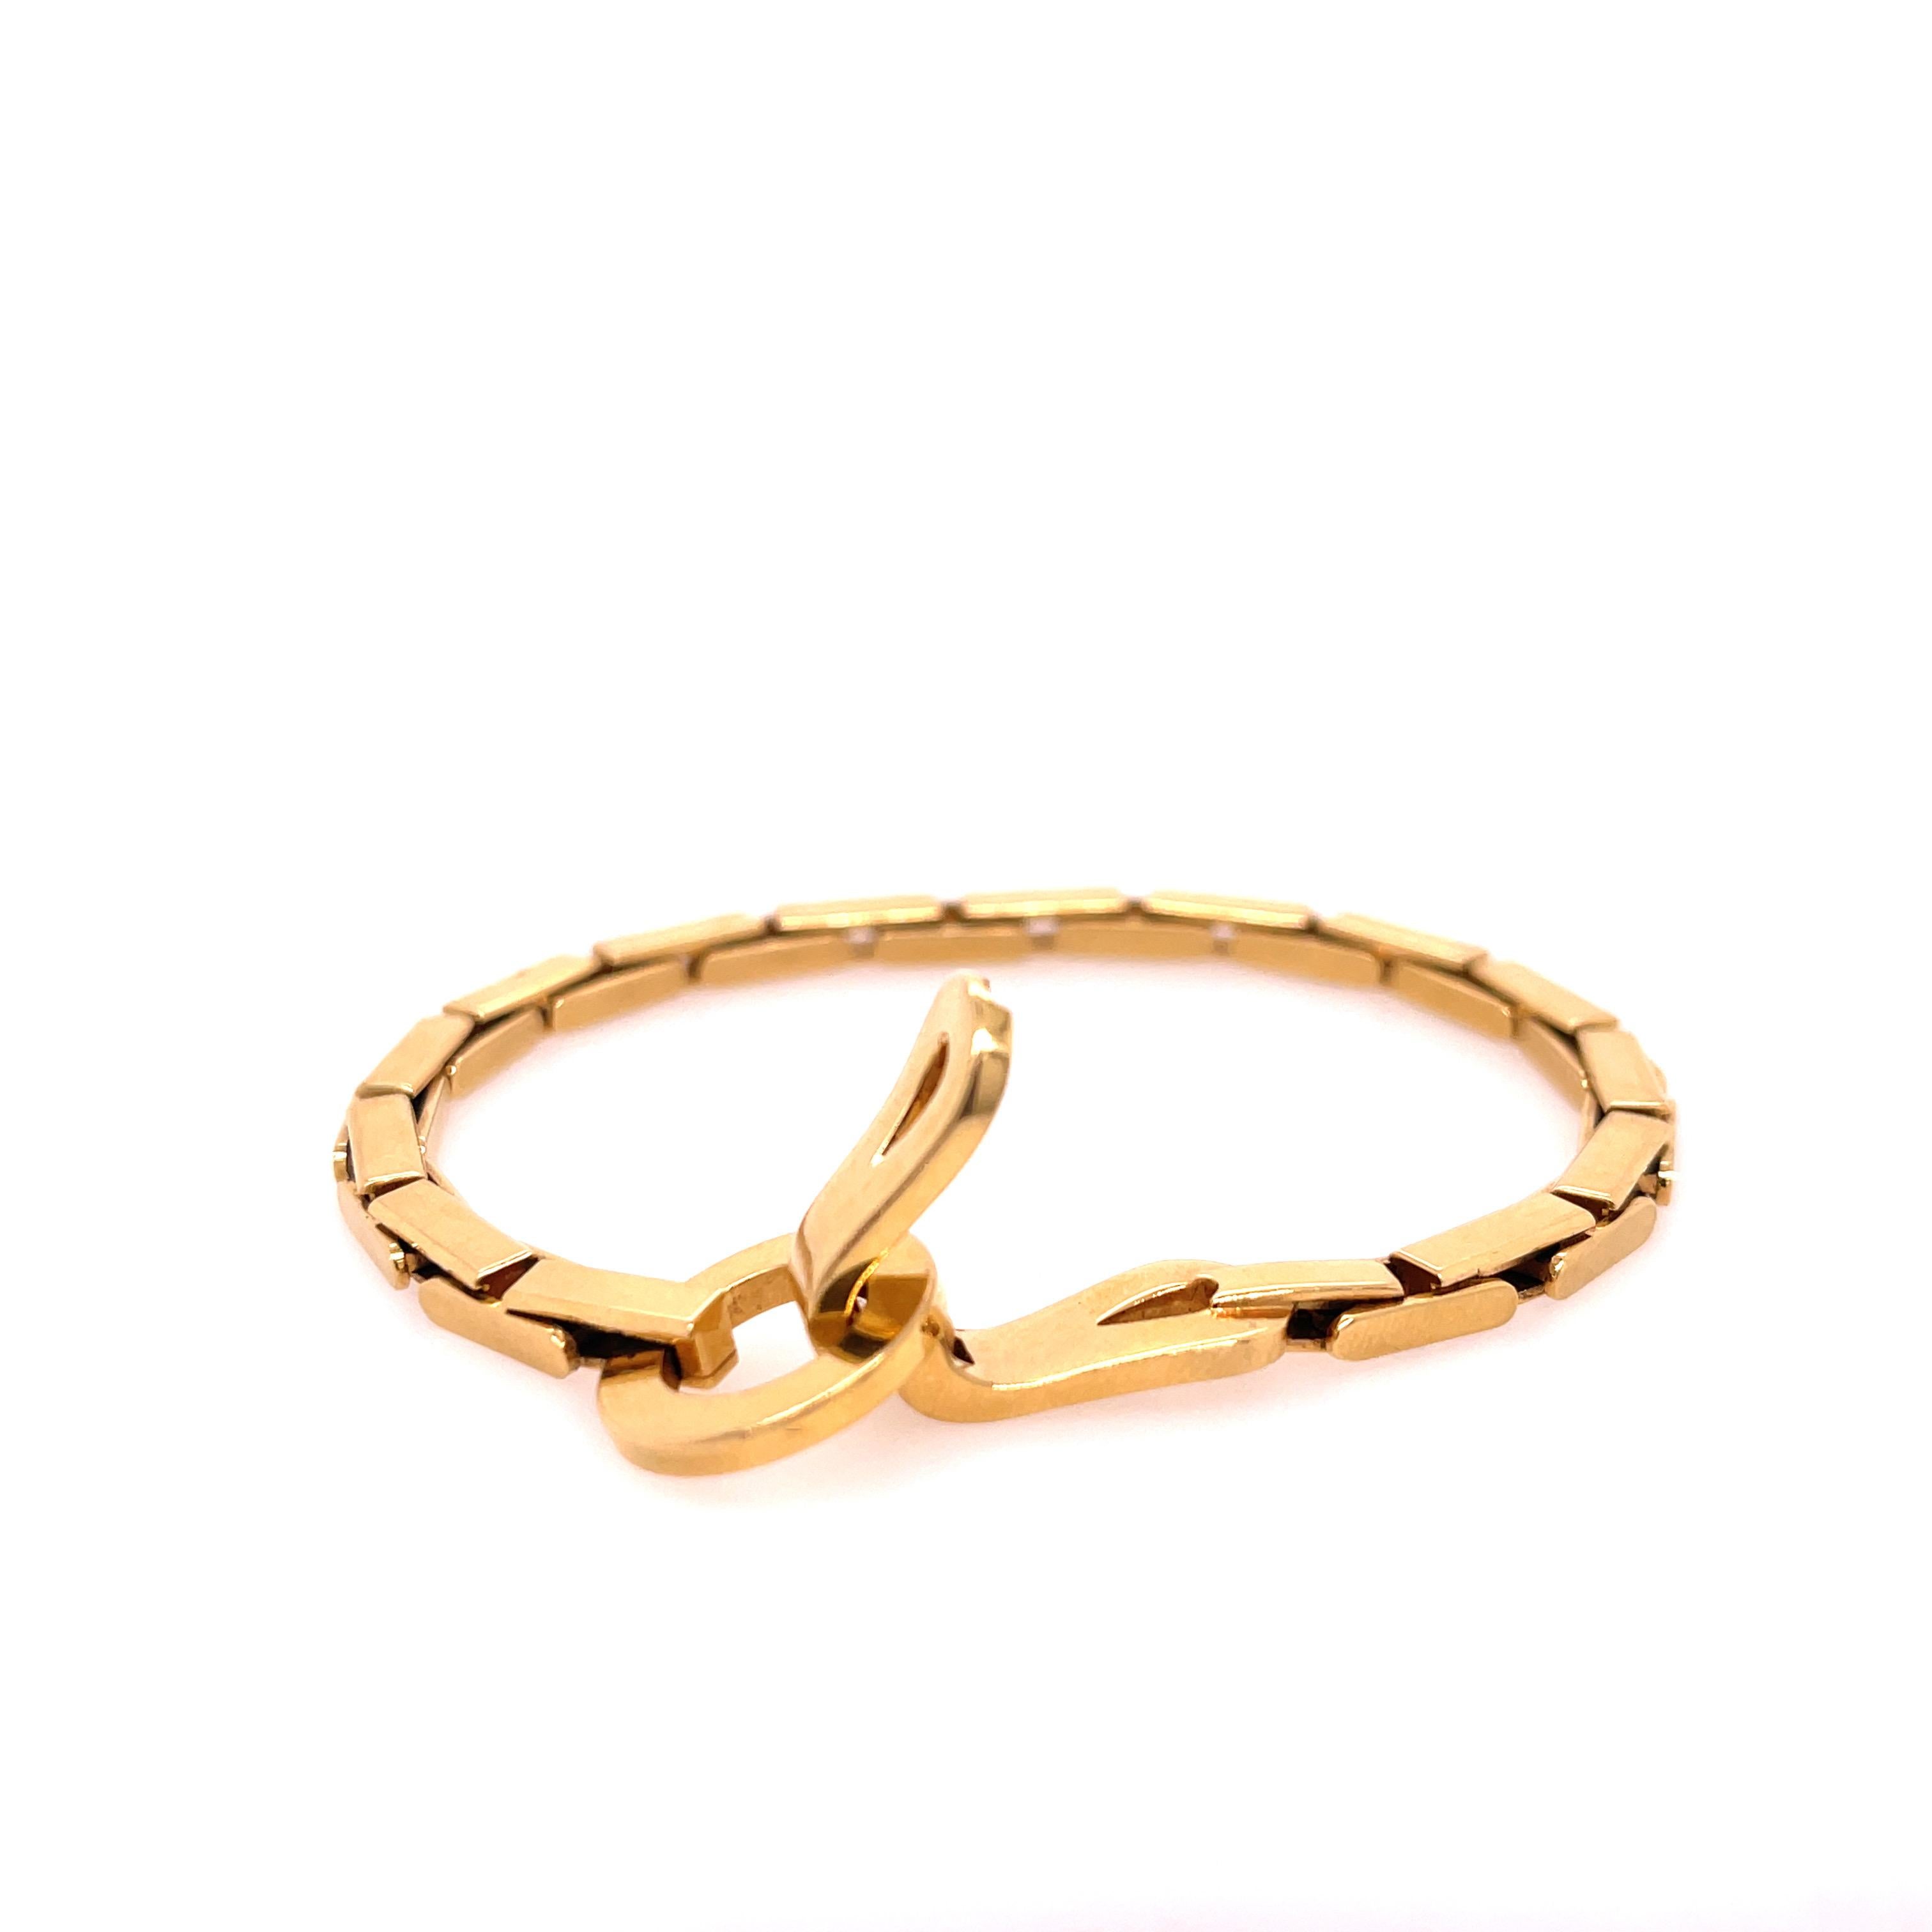 Cartier Agrafe Link Bracelet in 18K Yellow Gold. 
7.5